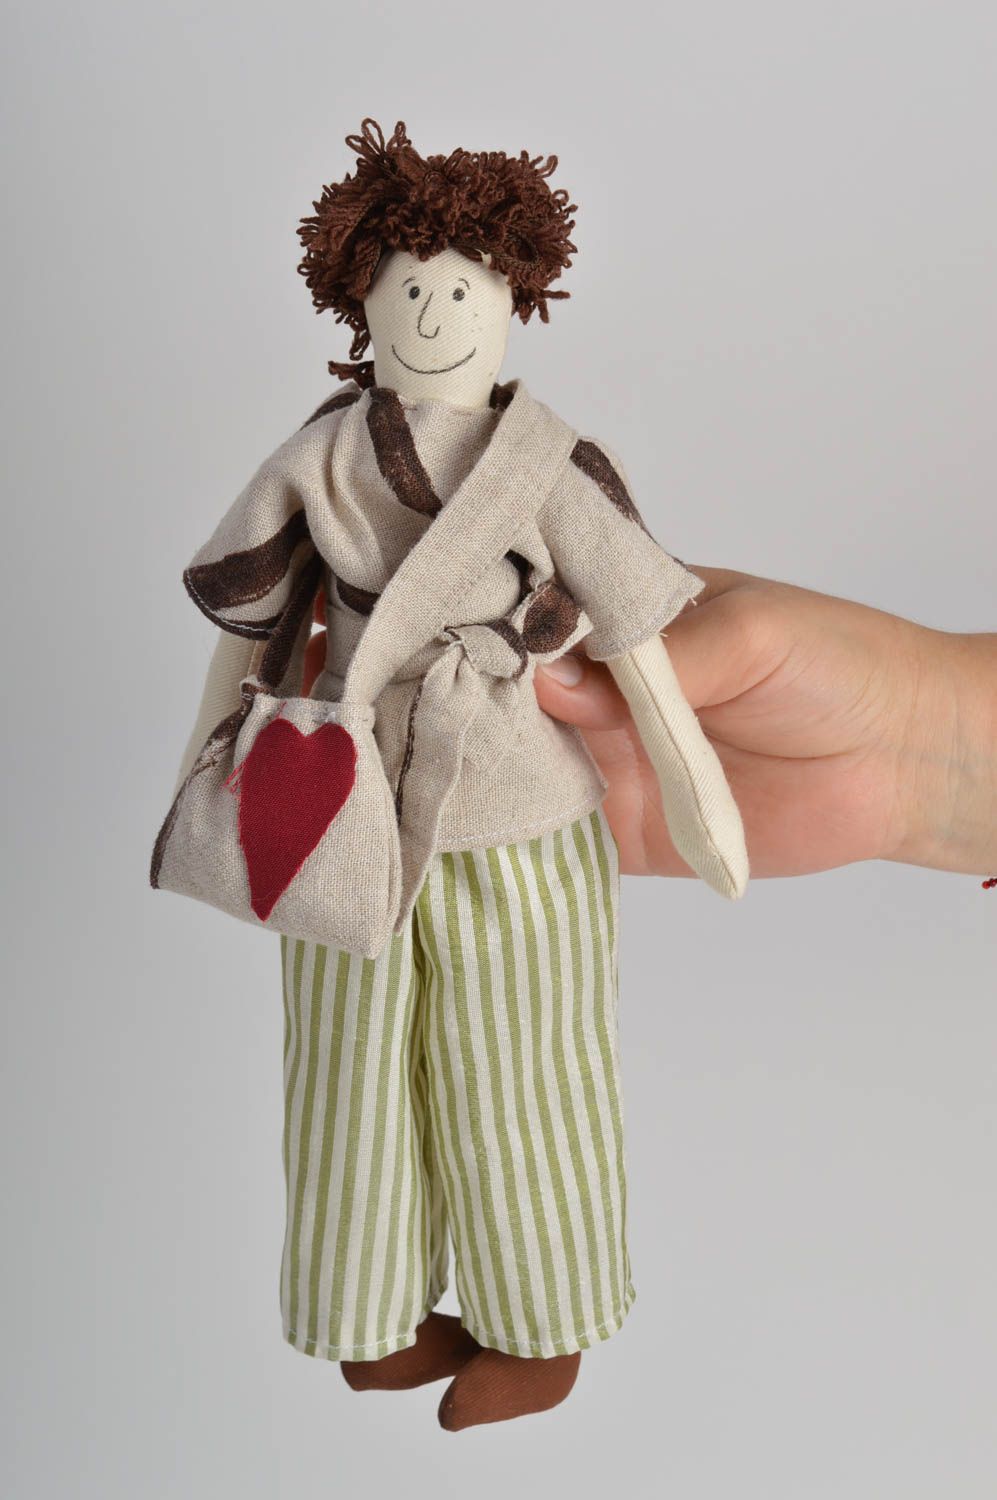 Handmade designer fabric soft doll for kids and interior decor boy with bag photo 5